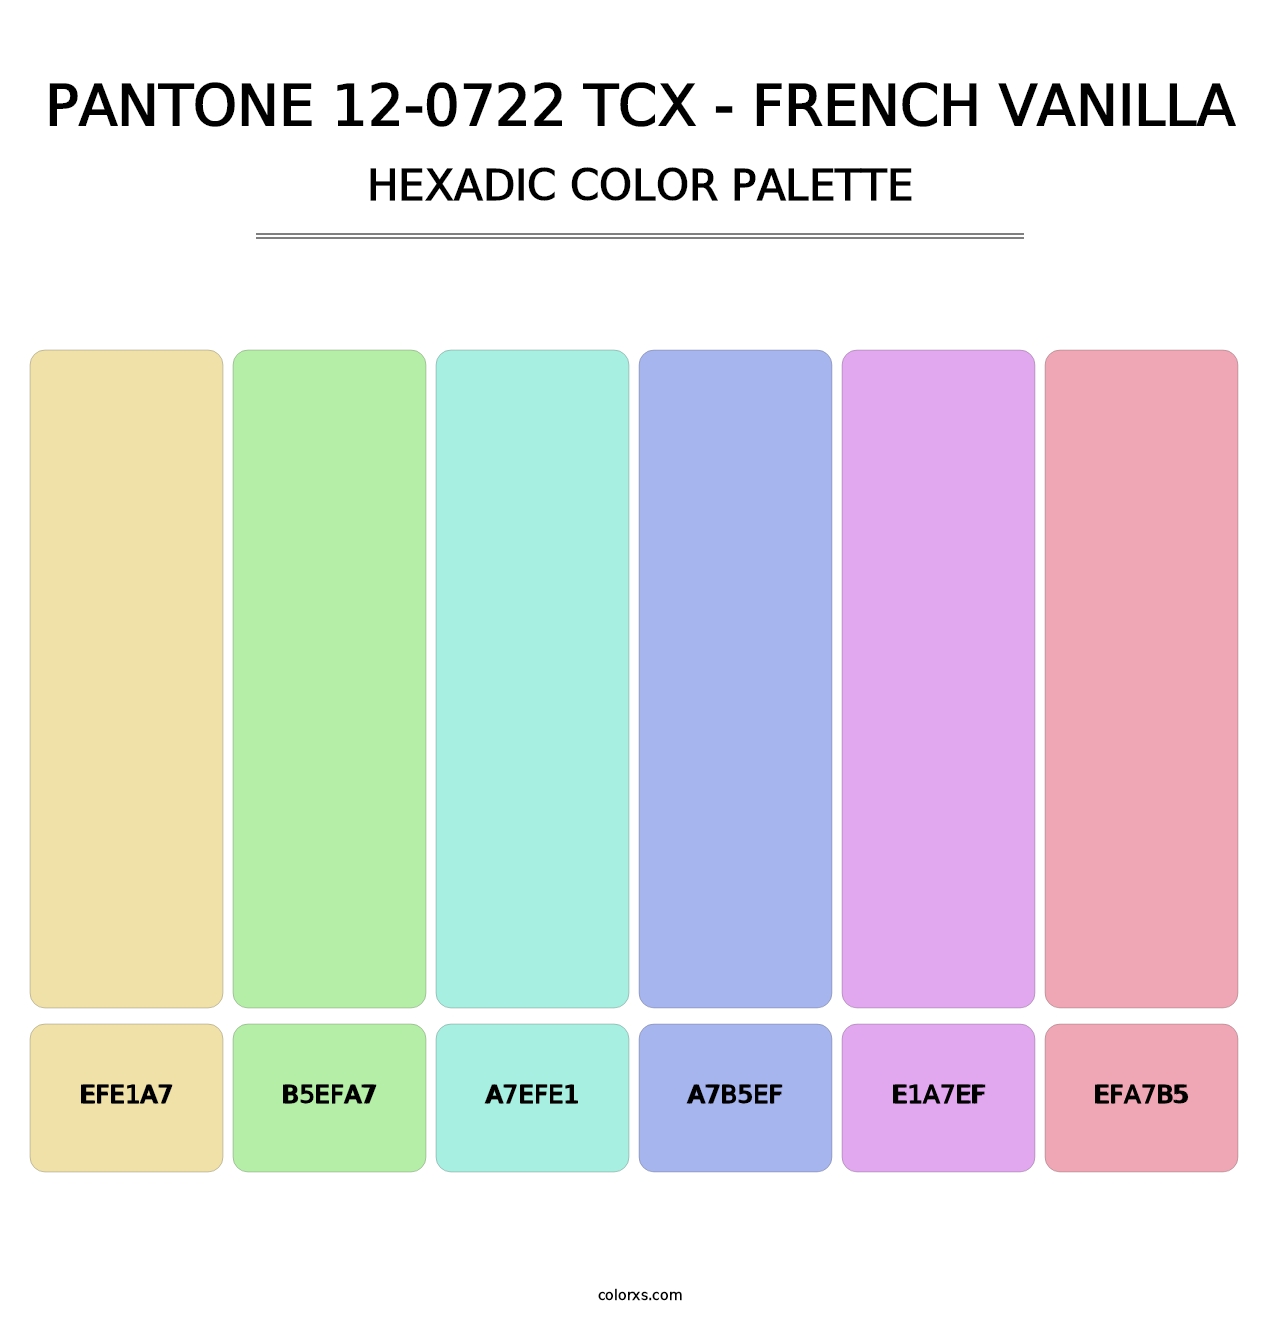 PANTONE 12-0722 TCX - French Vanilla - Hexadic Color Palette